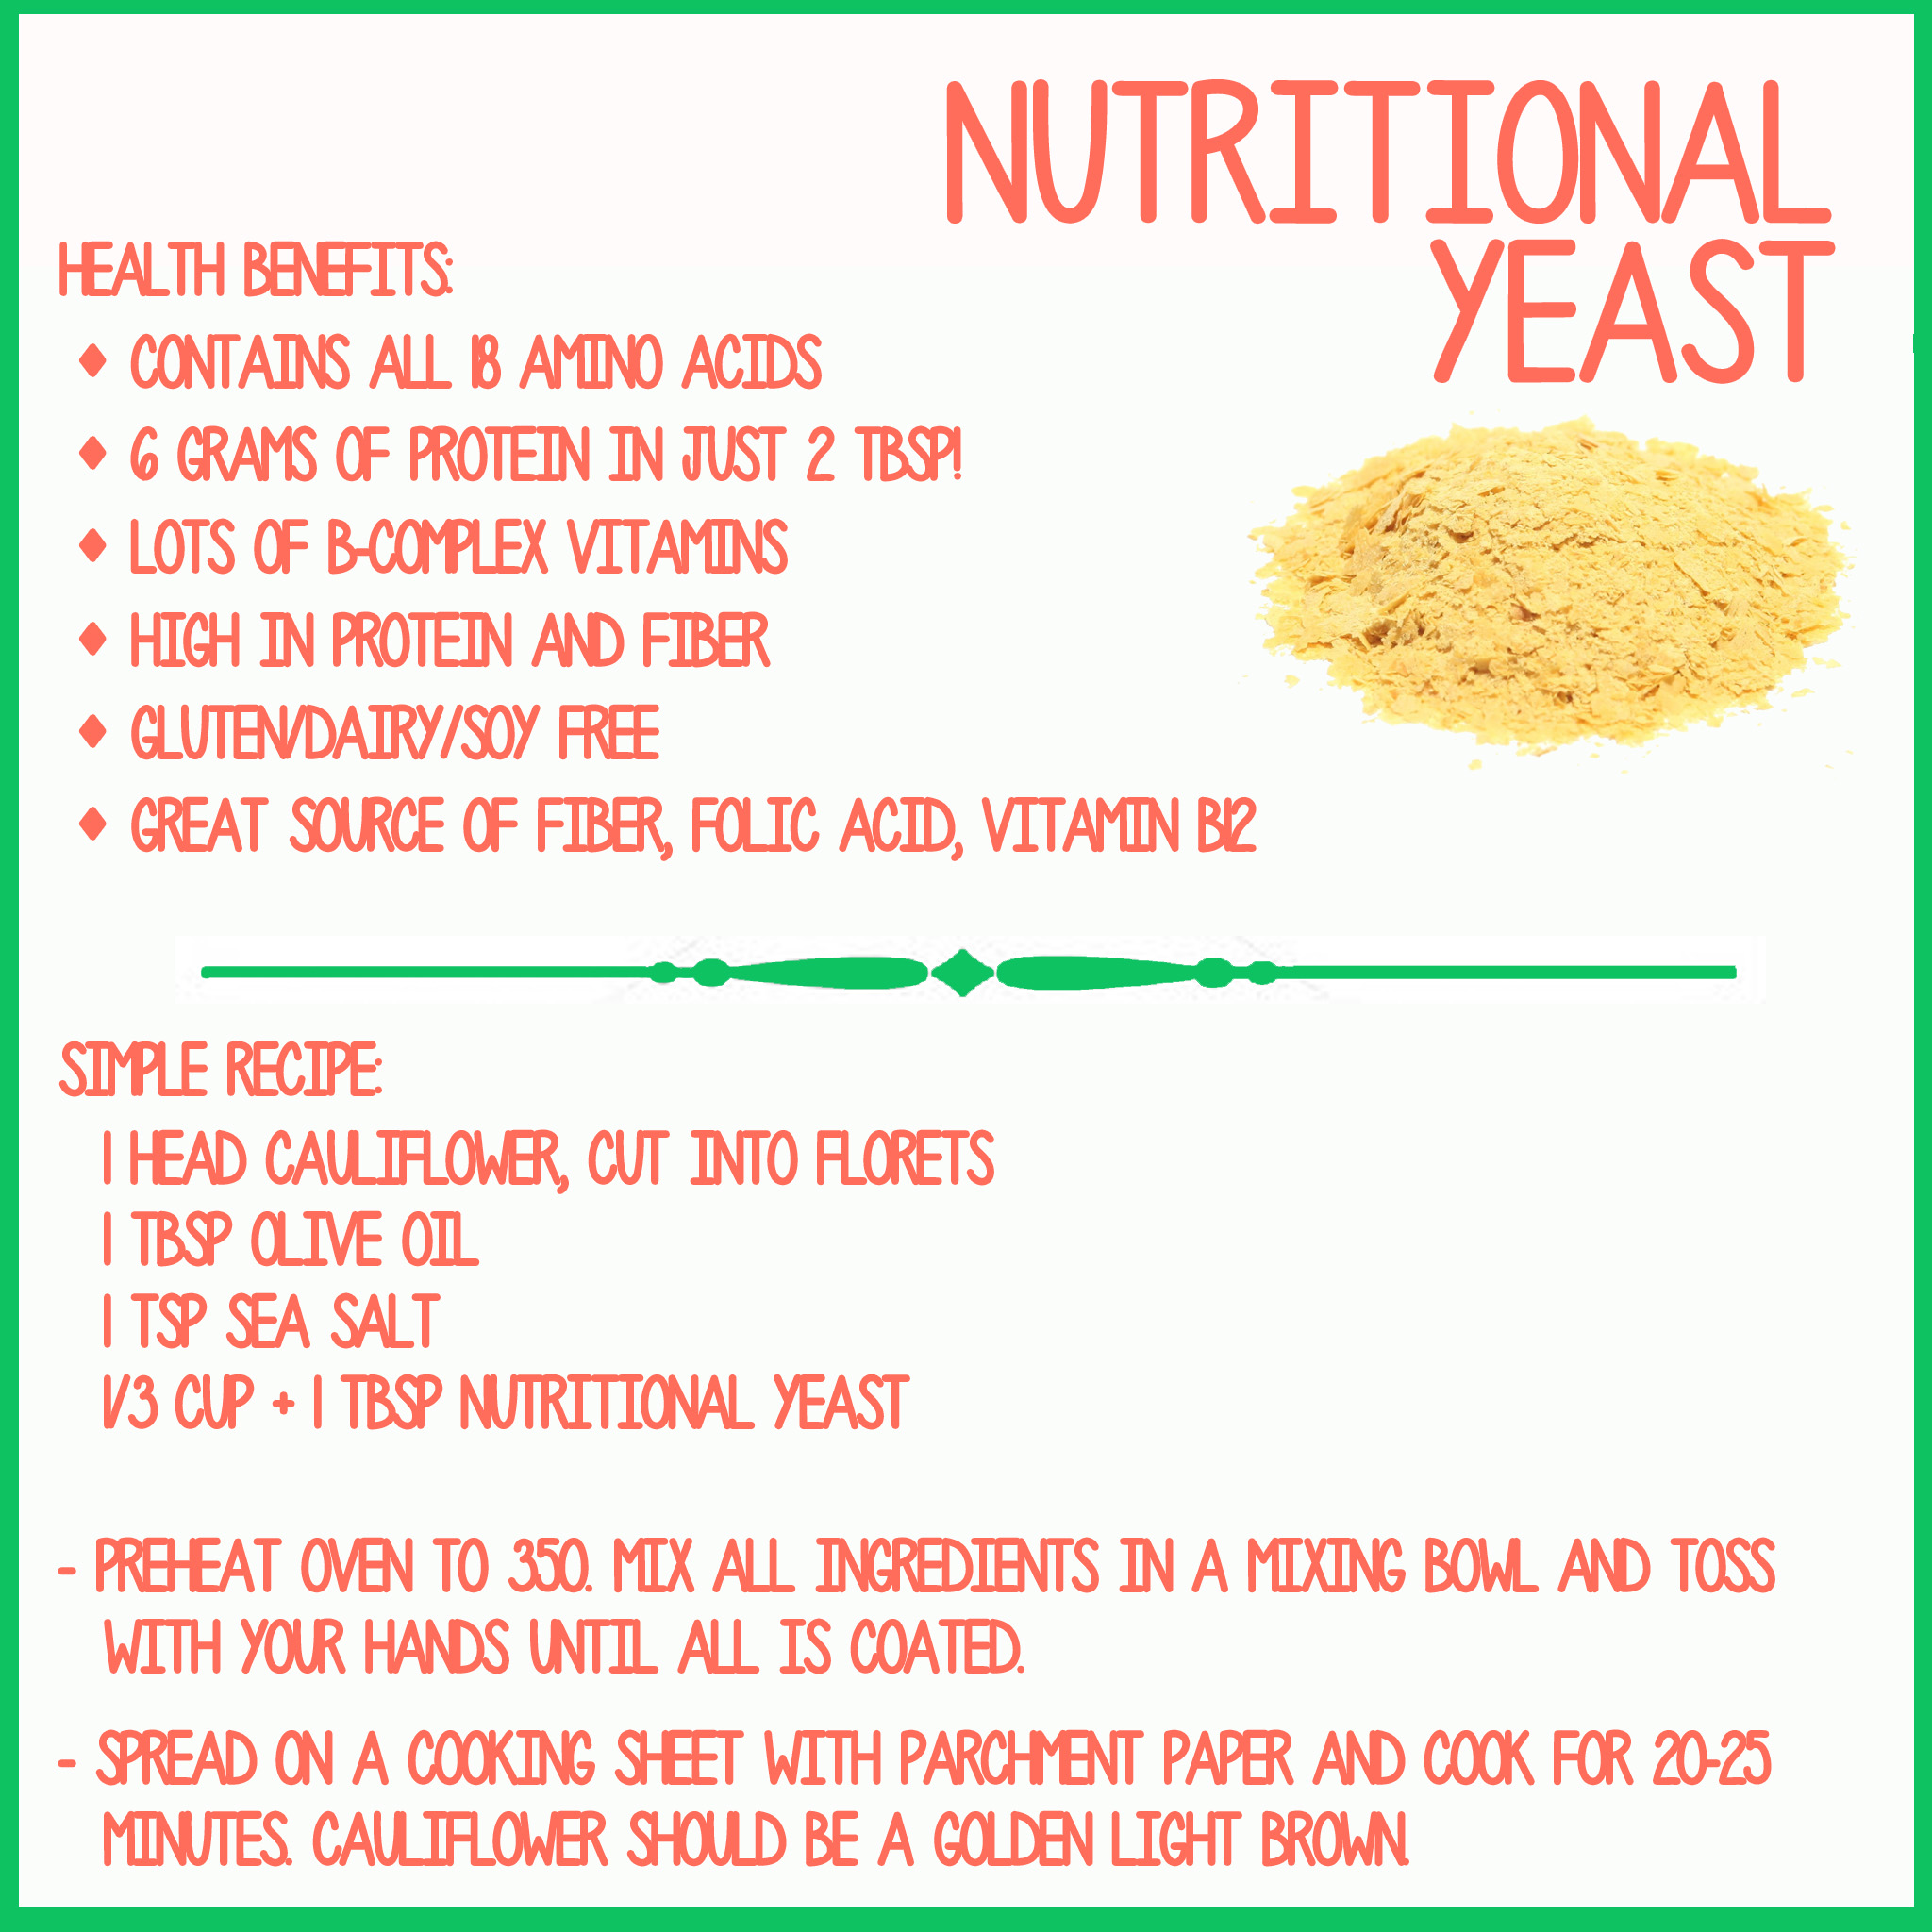 Health Benefits: Nutritional Yeast